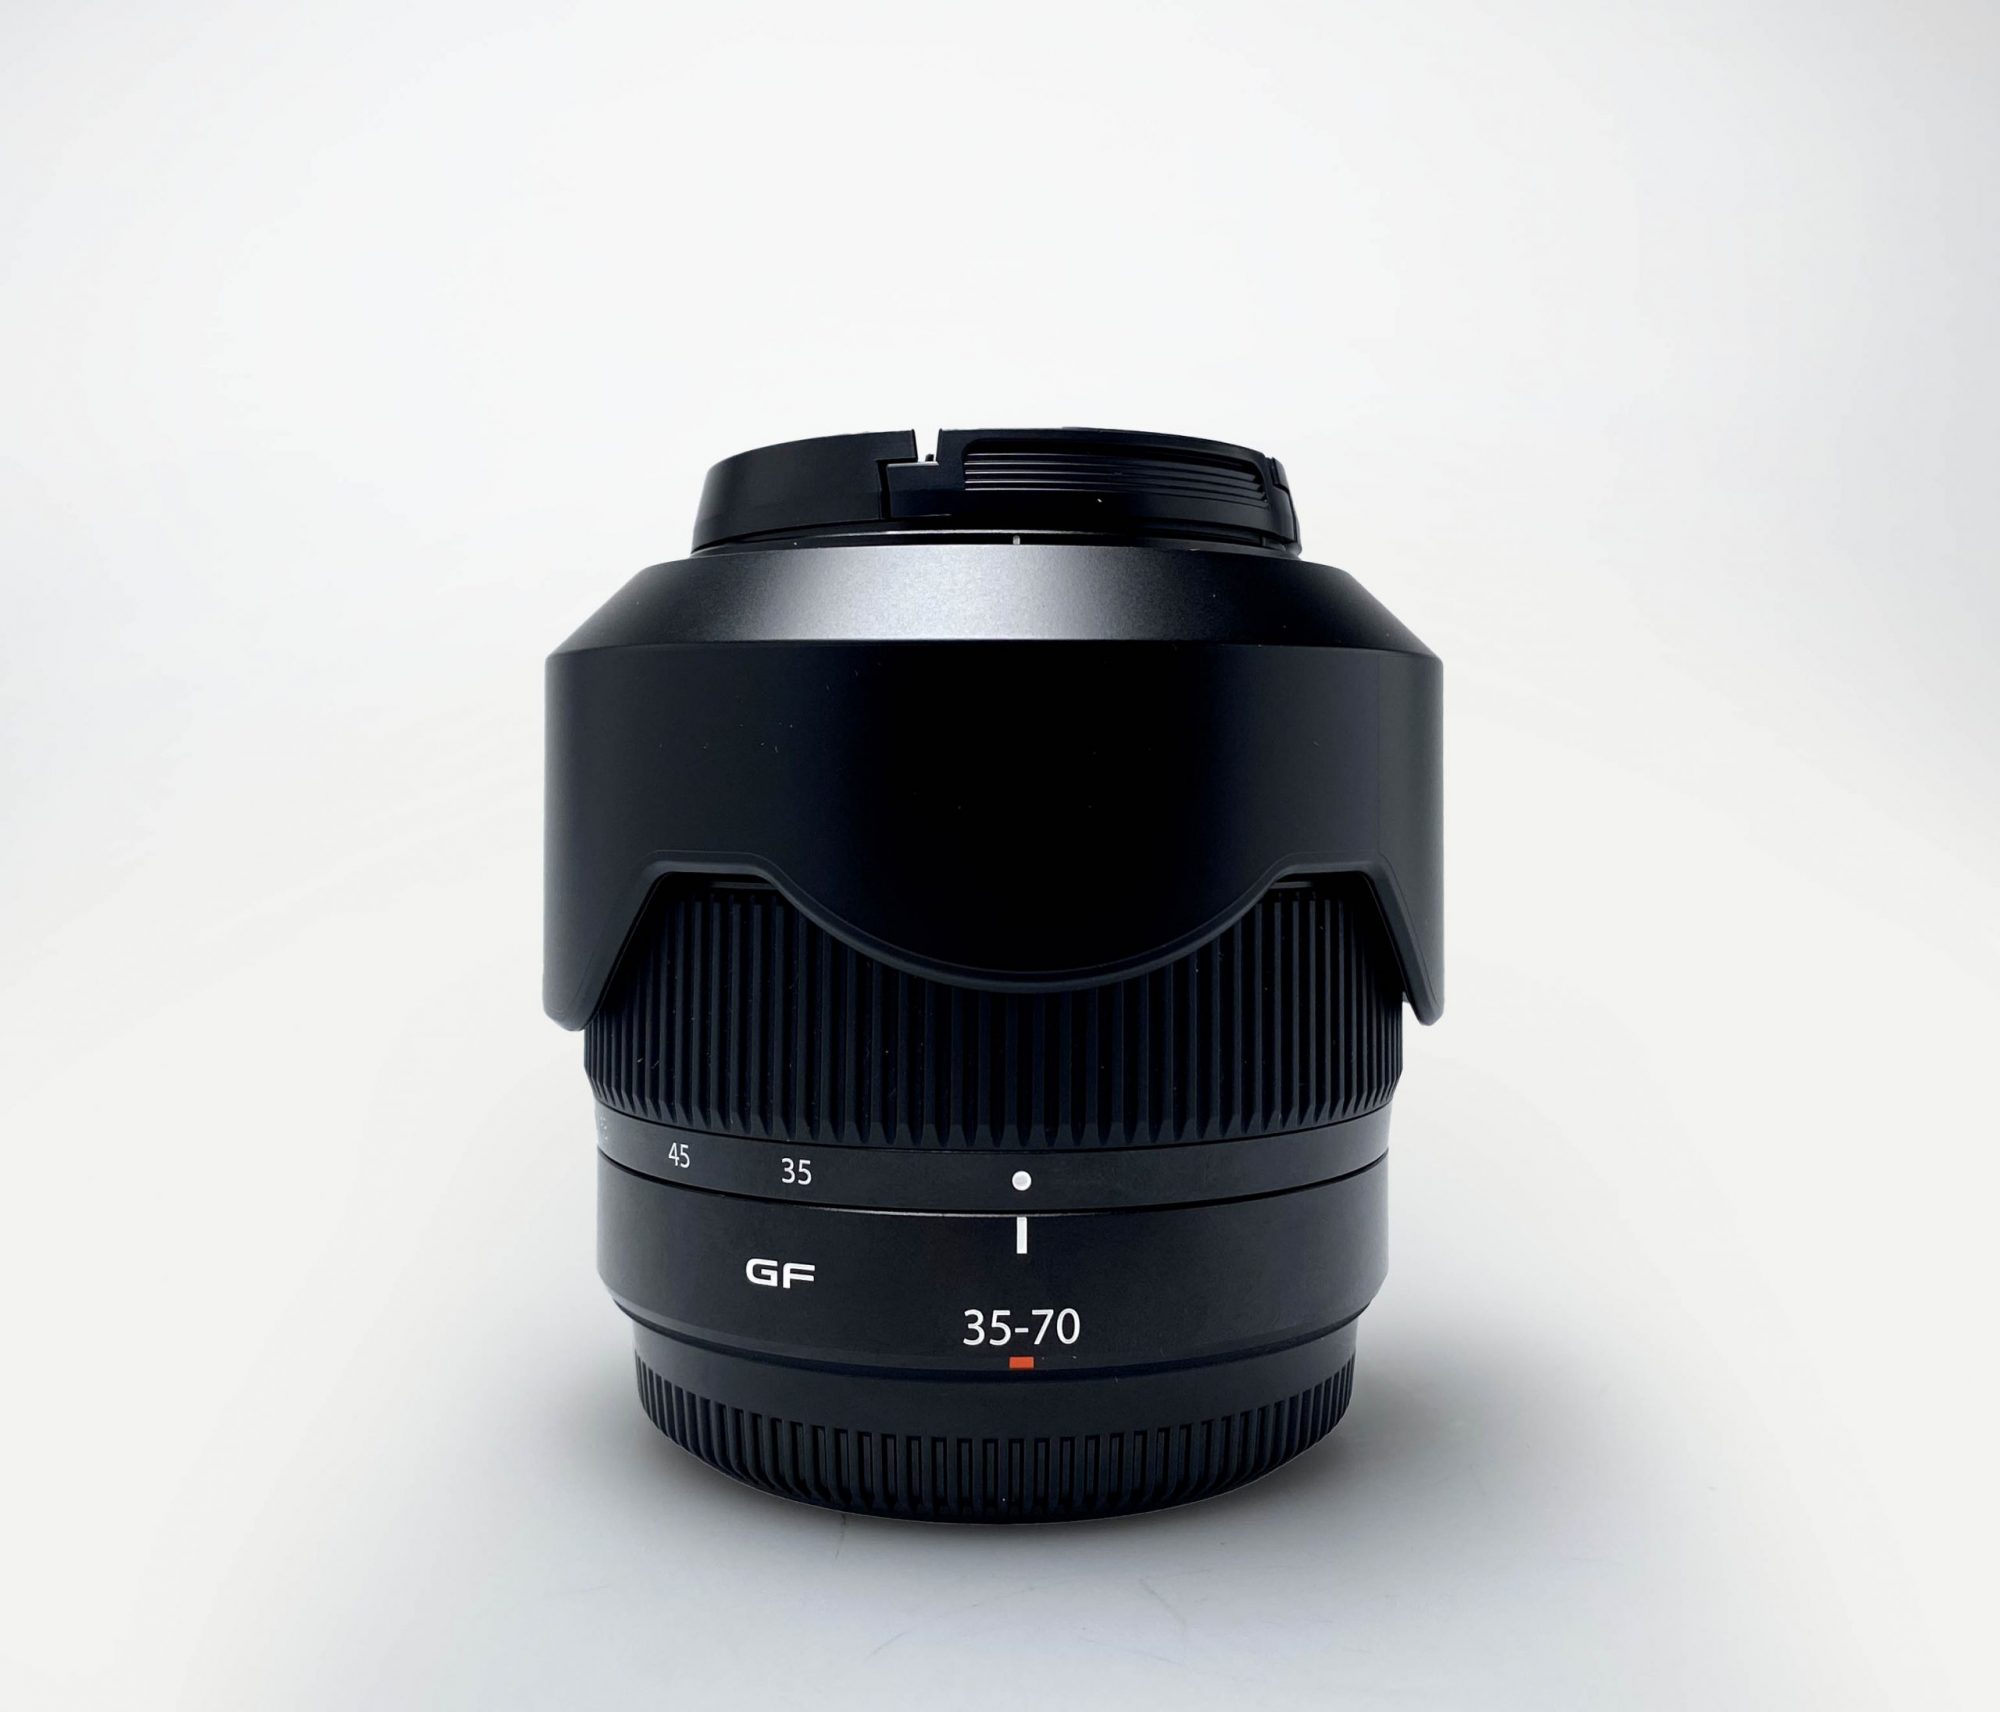 Fujifilm GF35-70mm Lens Review